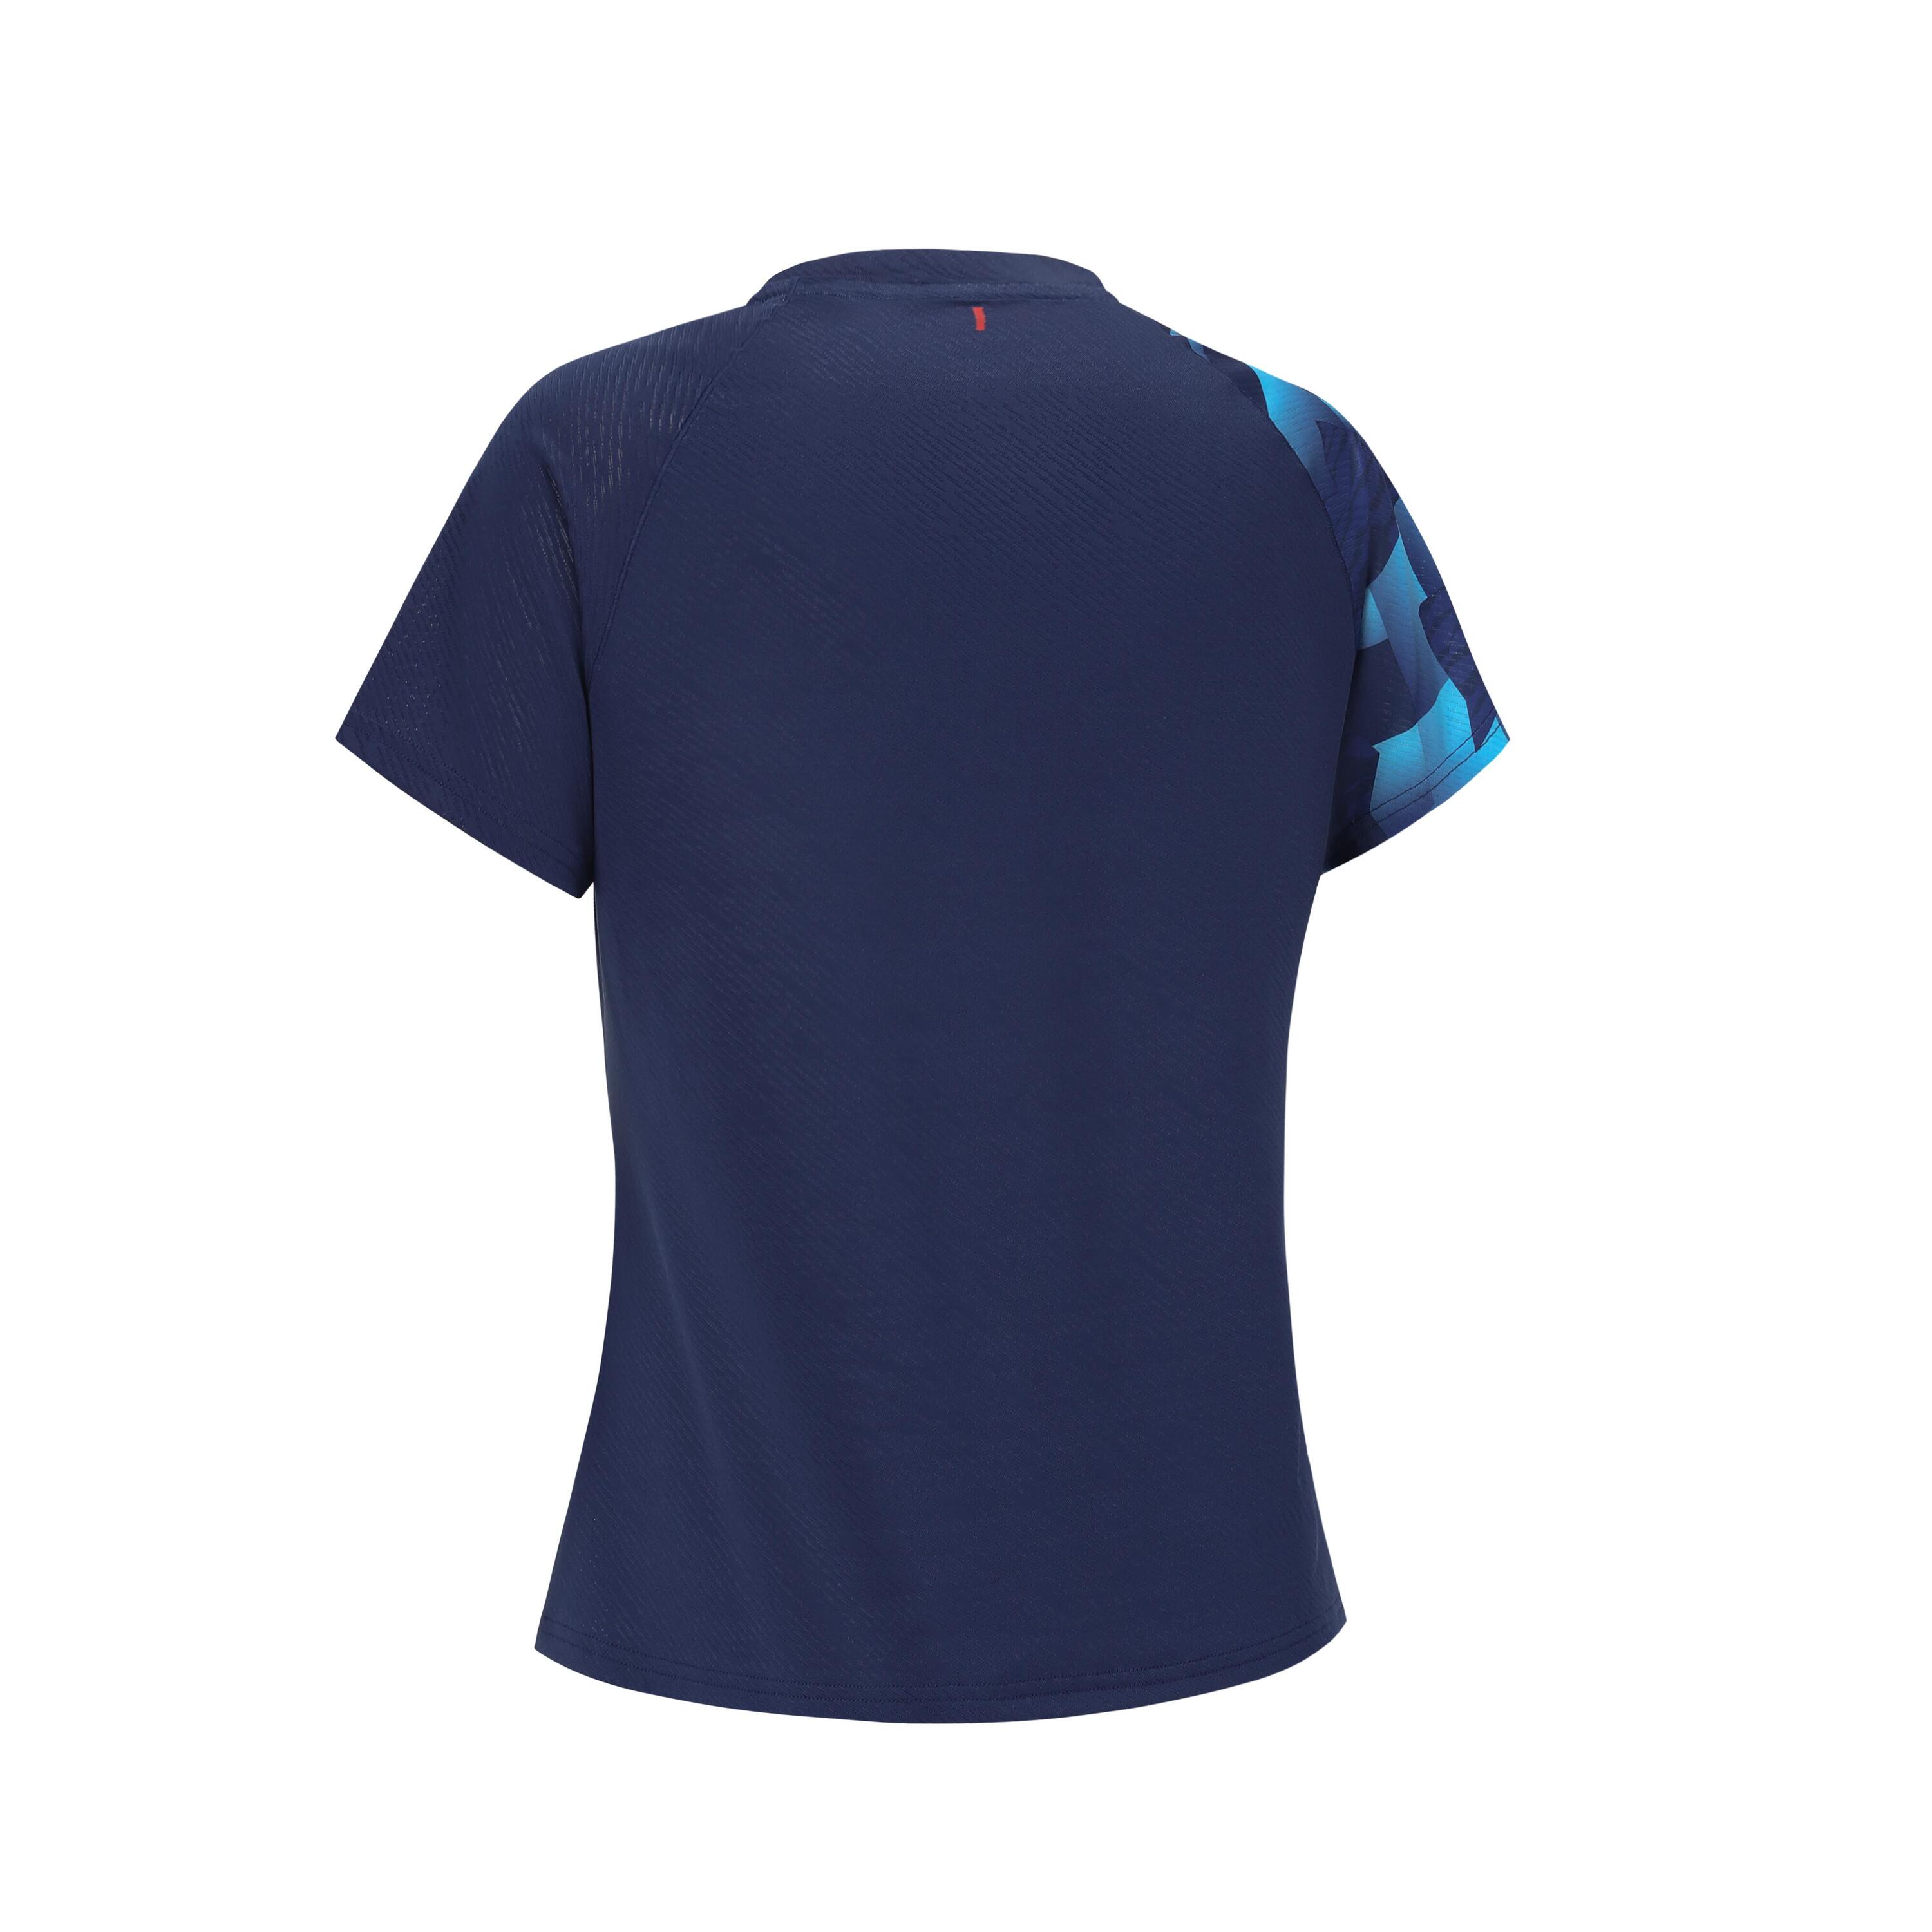 LITE Badminton T-shirt 560 Women Navy Aqua 2/7